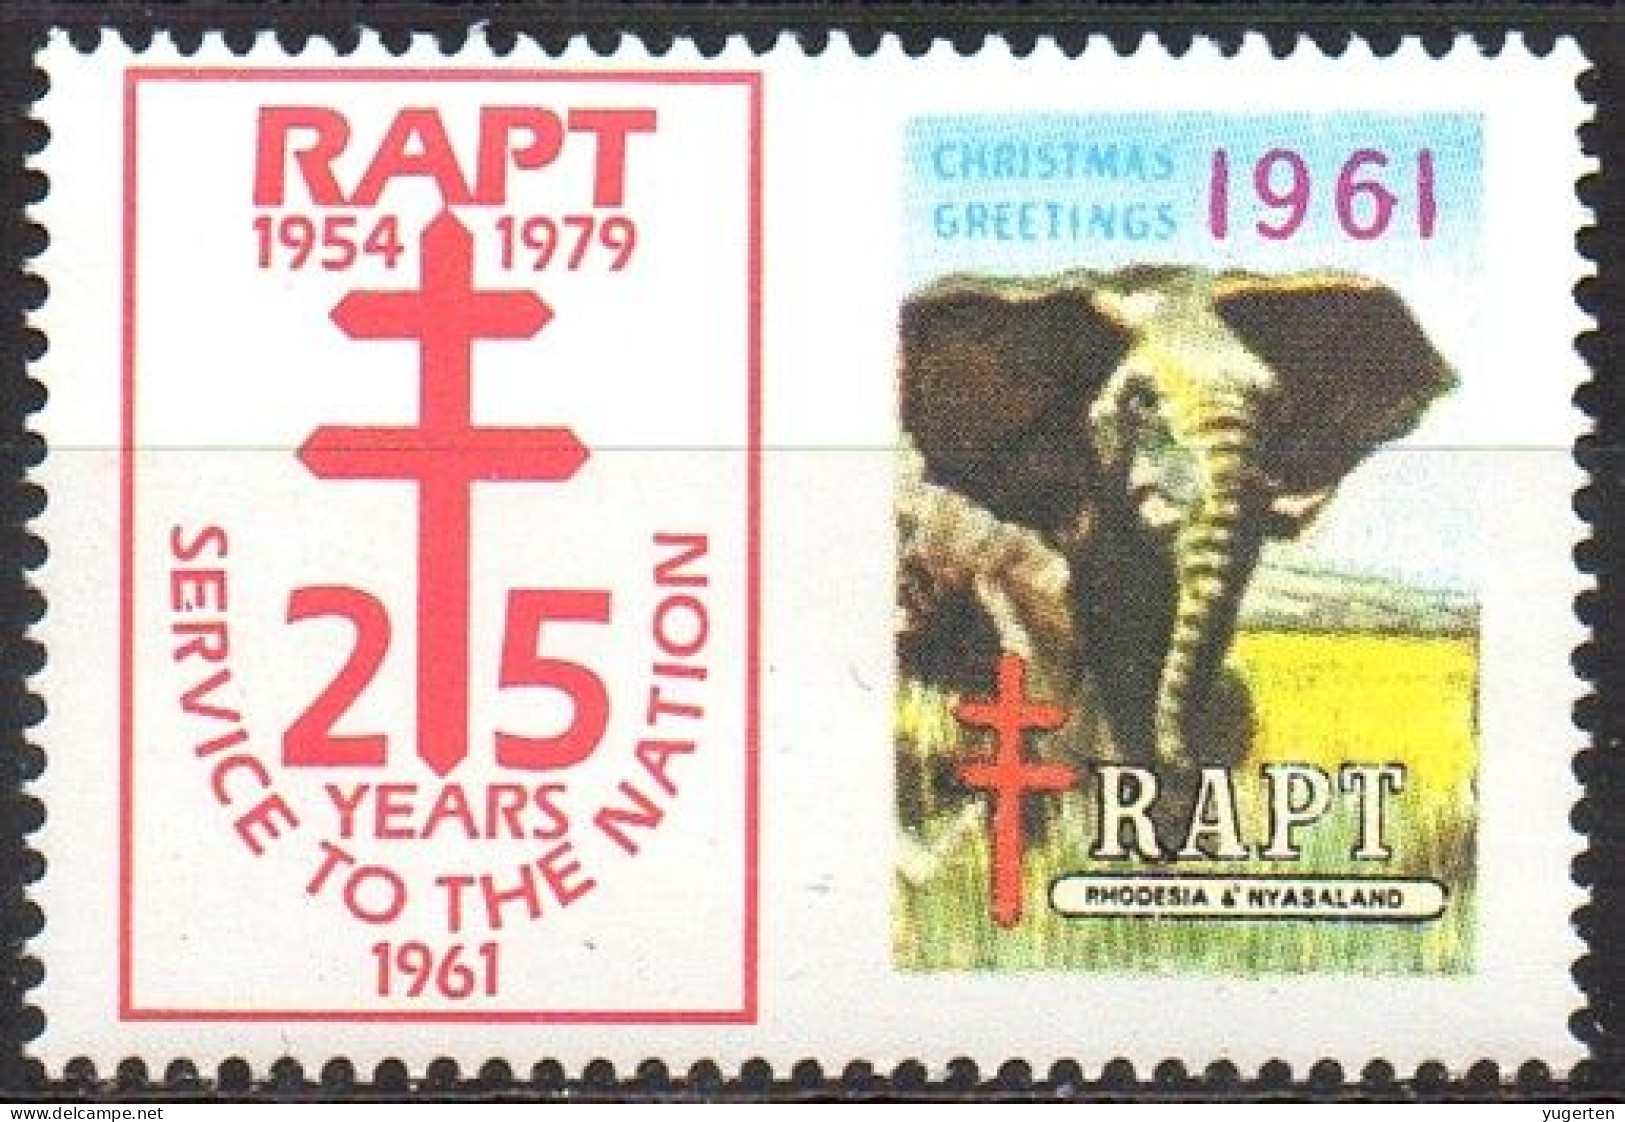 RODHESIA 1961 - Label - Local Post - RAPT - Elephants  Elephants Elefanten Elefantes Elefanti Fauna Animals Mammals - Elephants